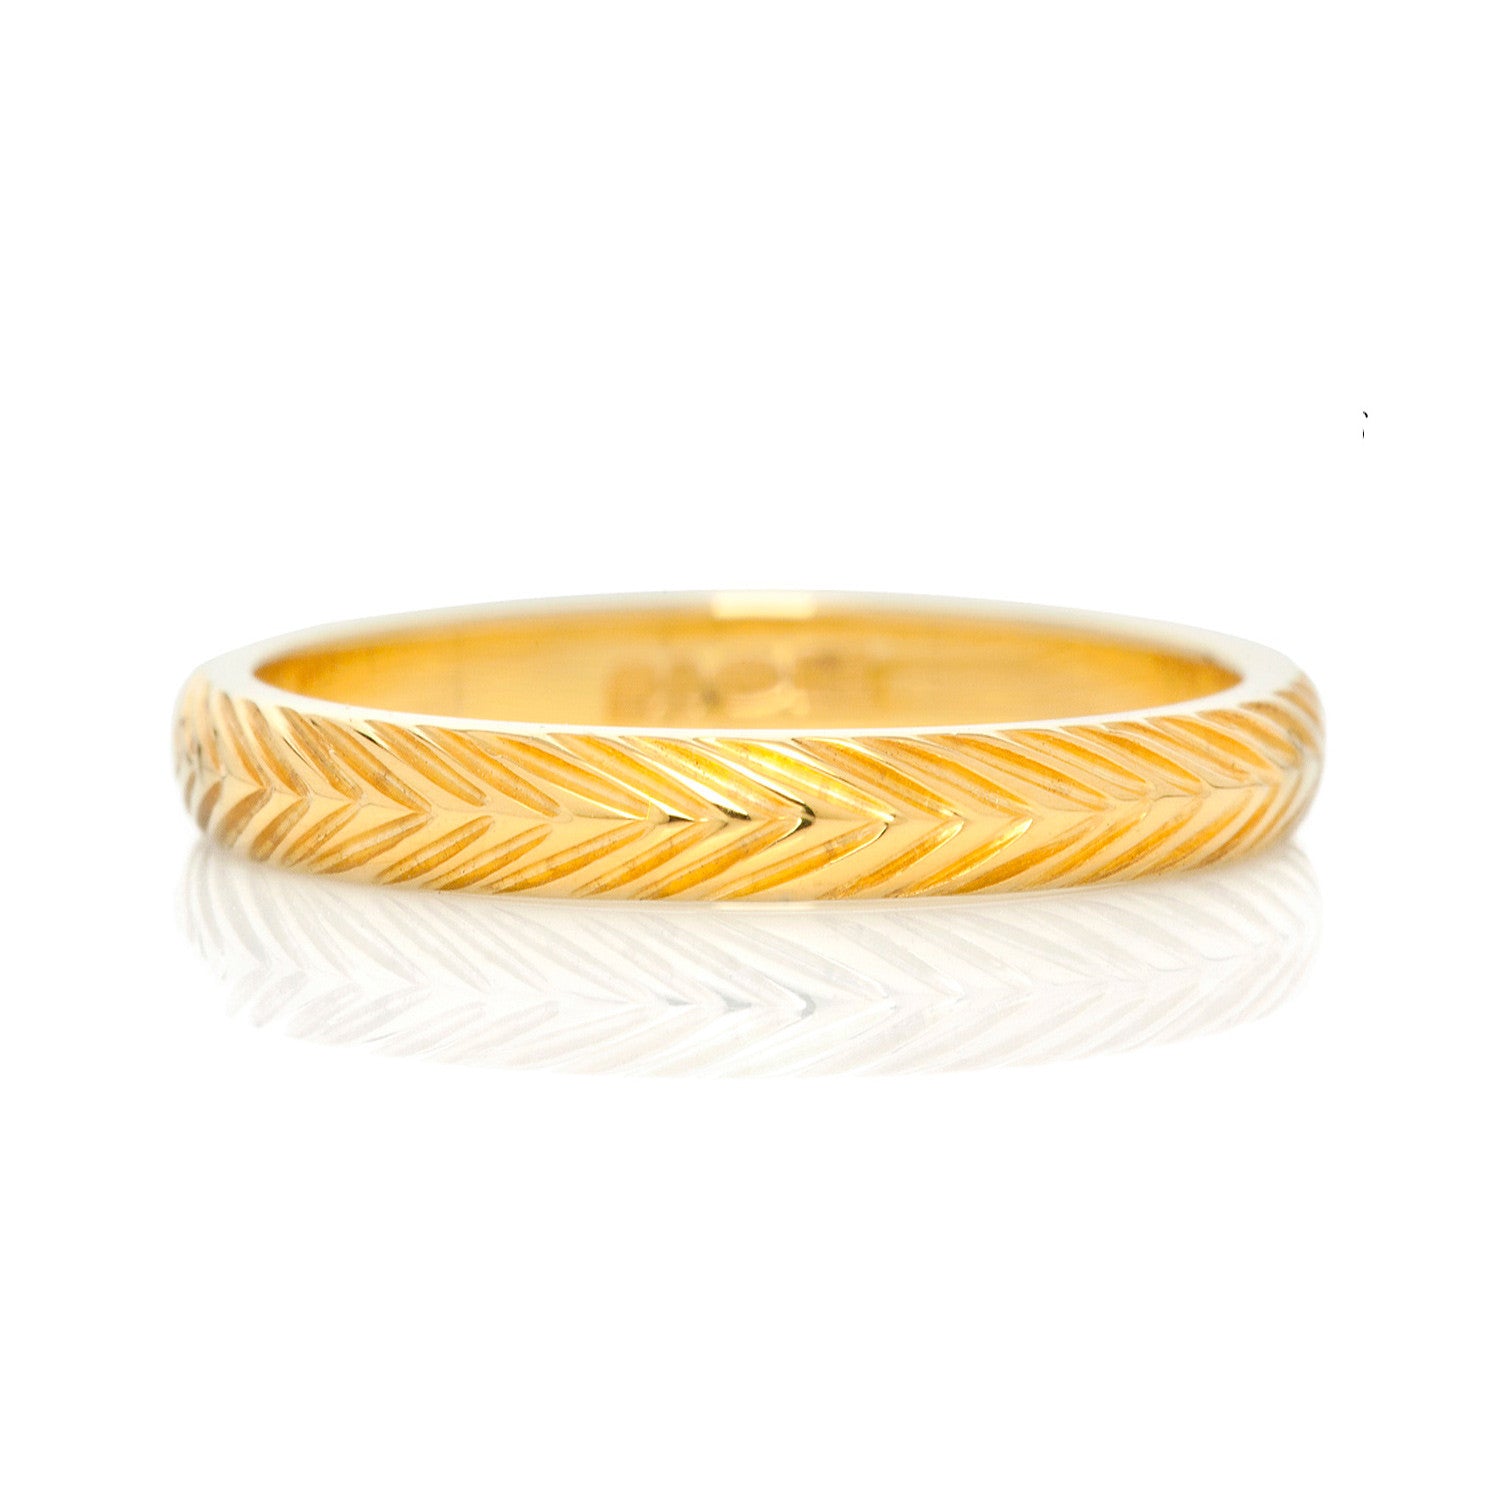 Wheat Sheaf Ethical Gold Wedding Ring, 3mm